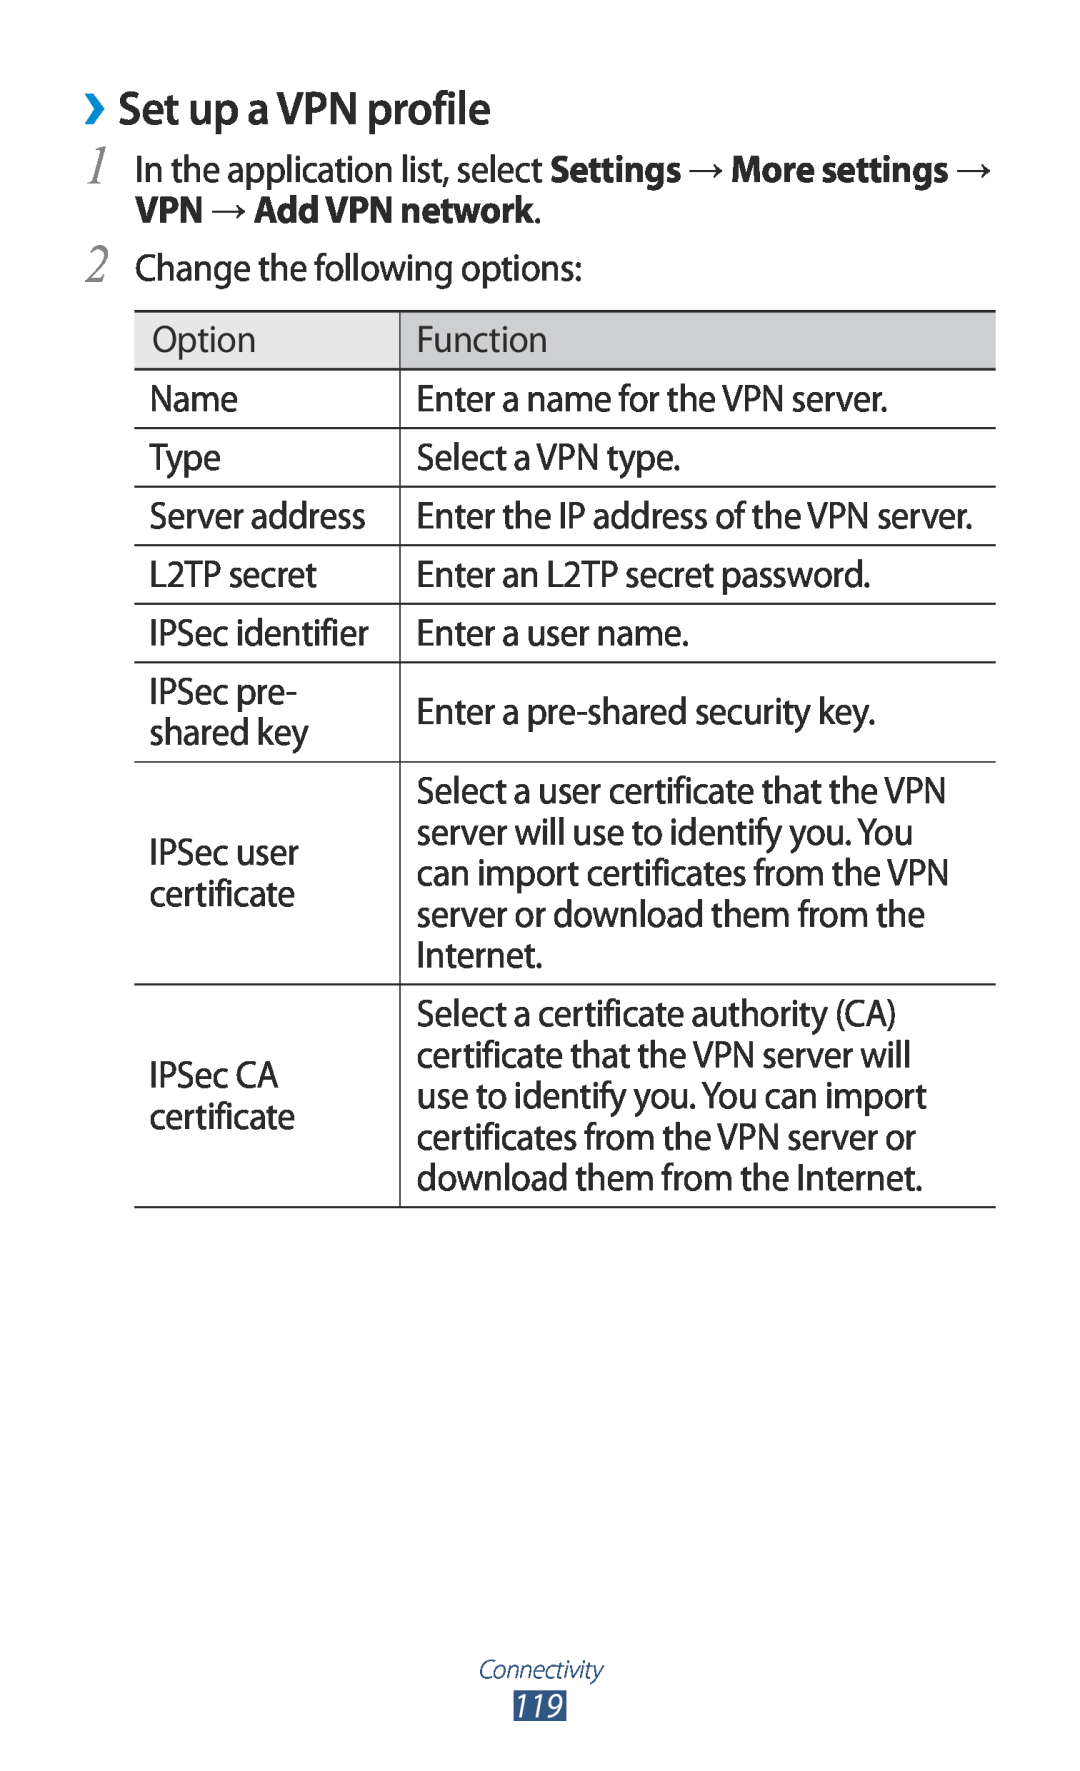 Samsung GT2S7560ZKAETL, GT-S7560ZKAVDR, GT-S7560ZKAPRT, GT-S7560UWAWIN manual ››Set up a VPN profile, VPN → Add VPN network 